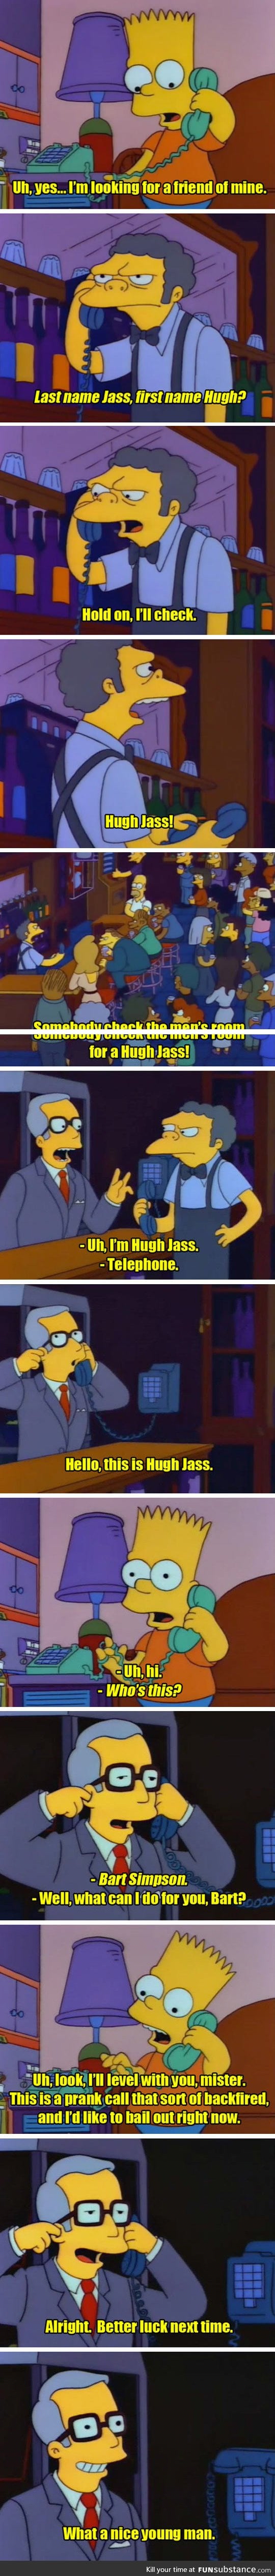 Simpsons prank